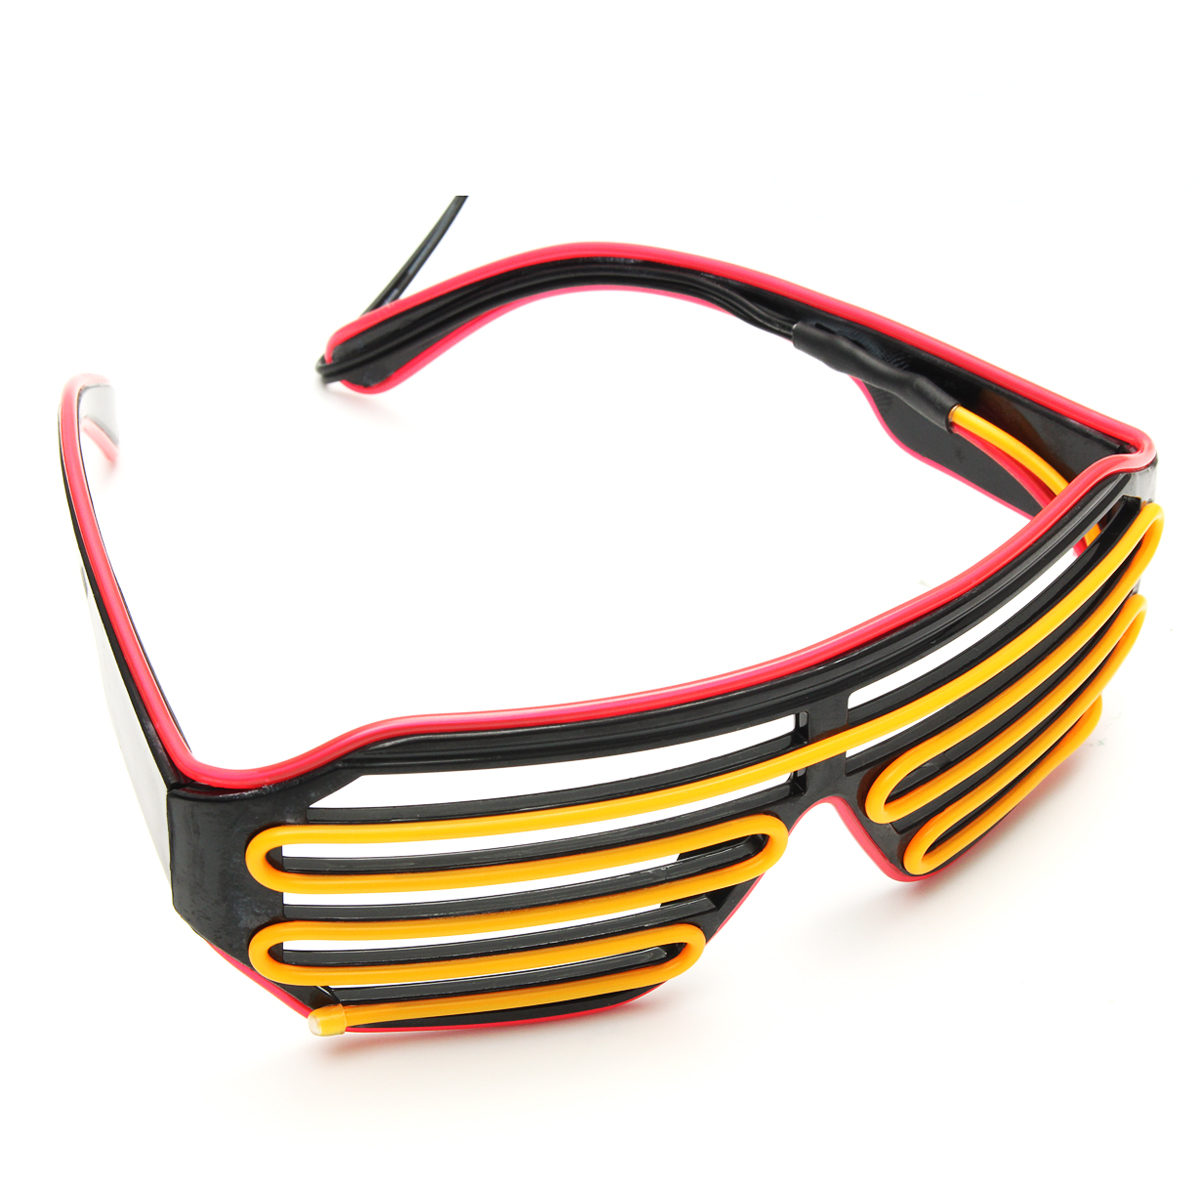 Sound-Control-Glasses-Flash-EL-Wire-Glasses-Neon-LED-Light-Up-Shutter-Glow-Frame-Glasses-1230176